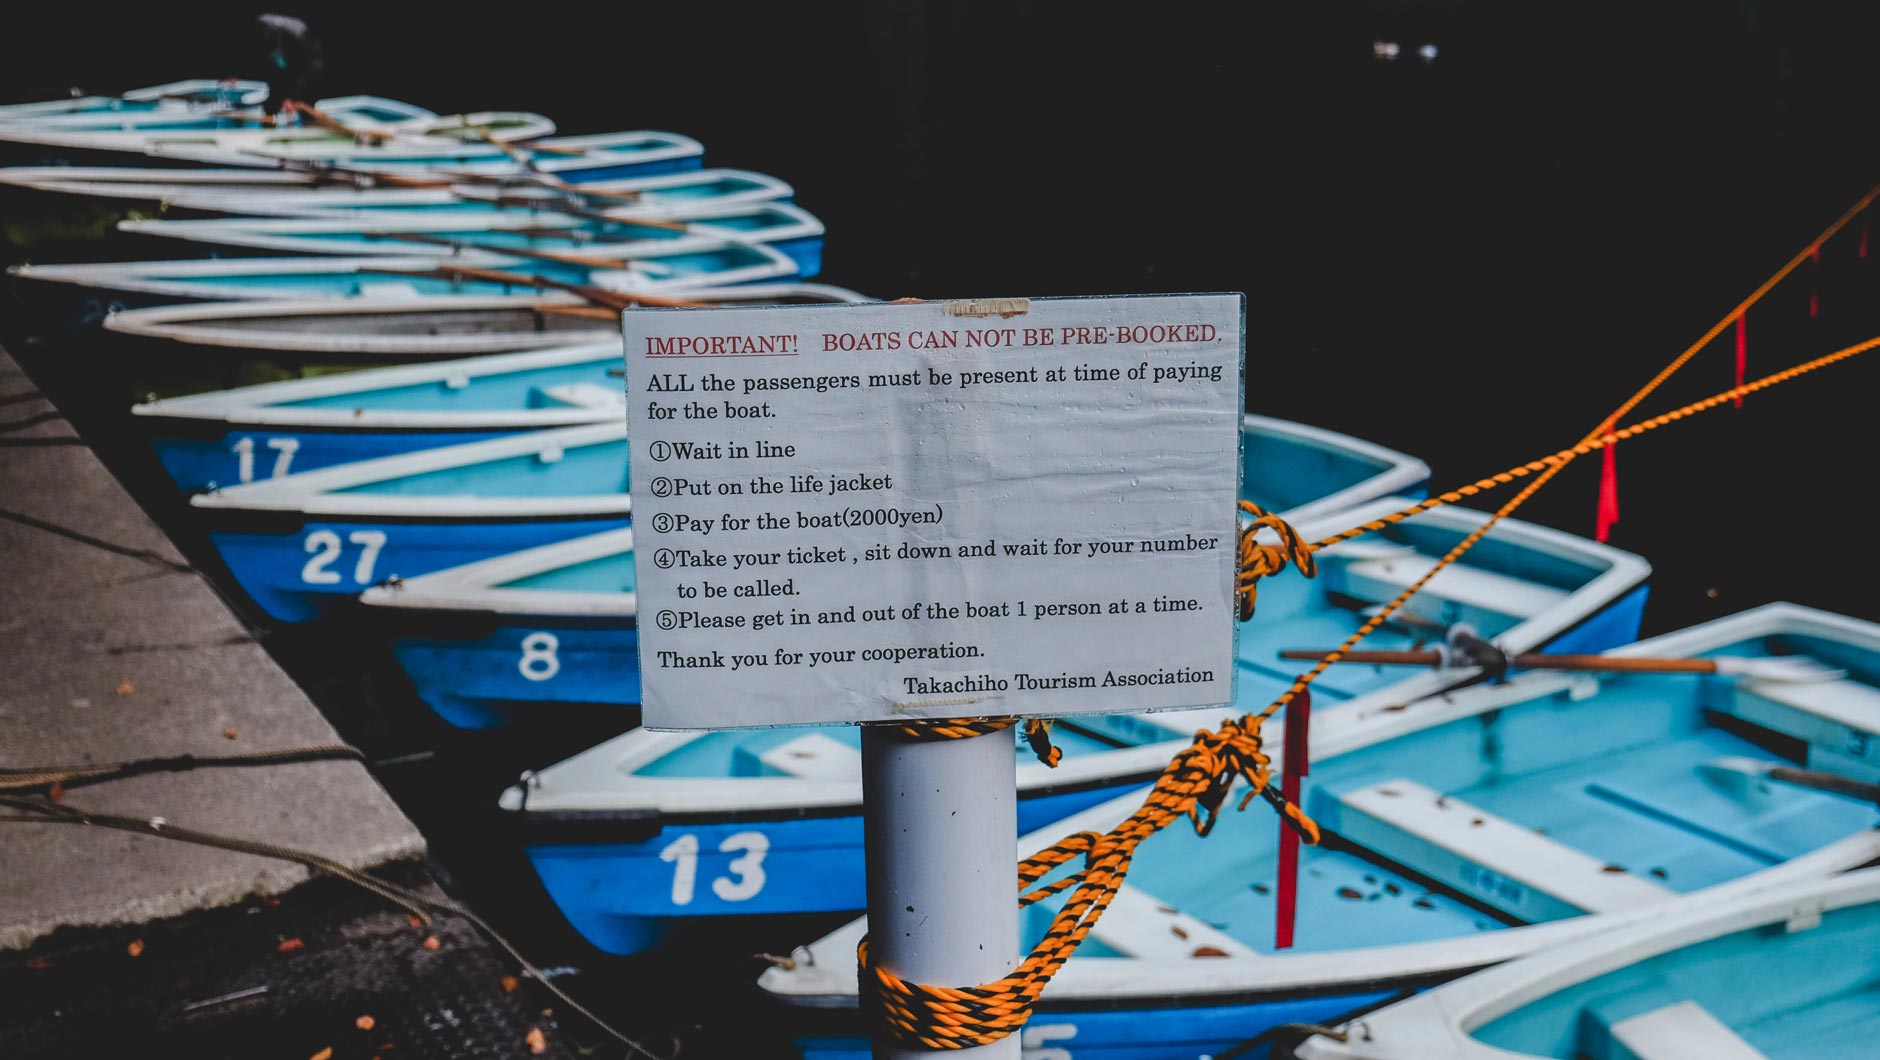 Takachiho Boat ride rules